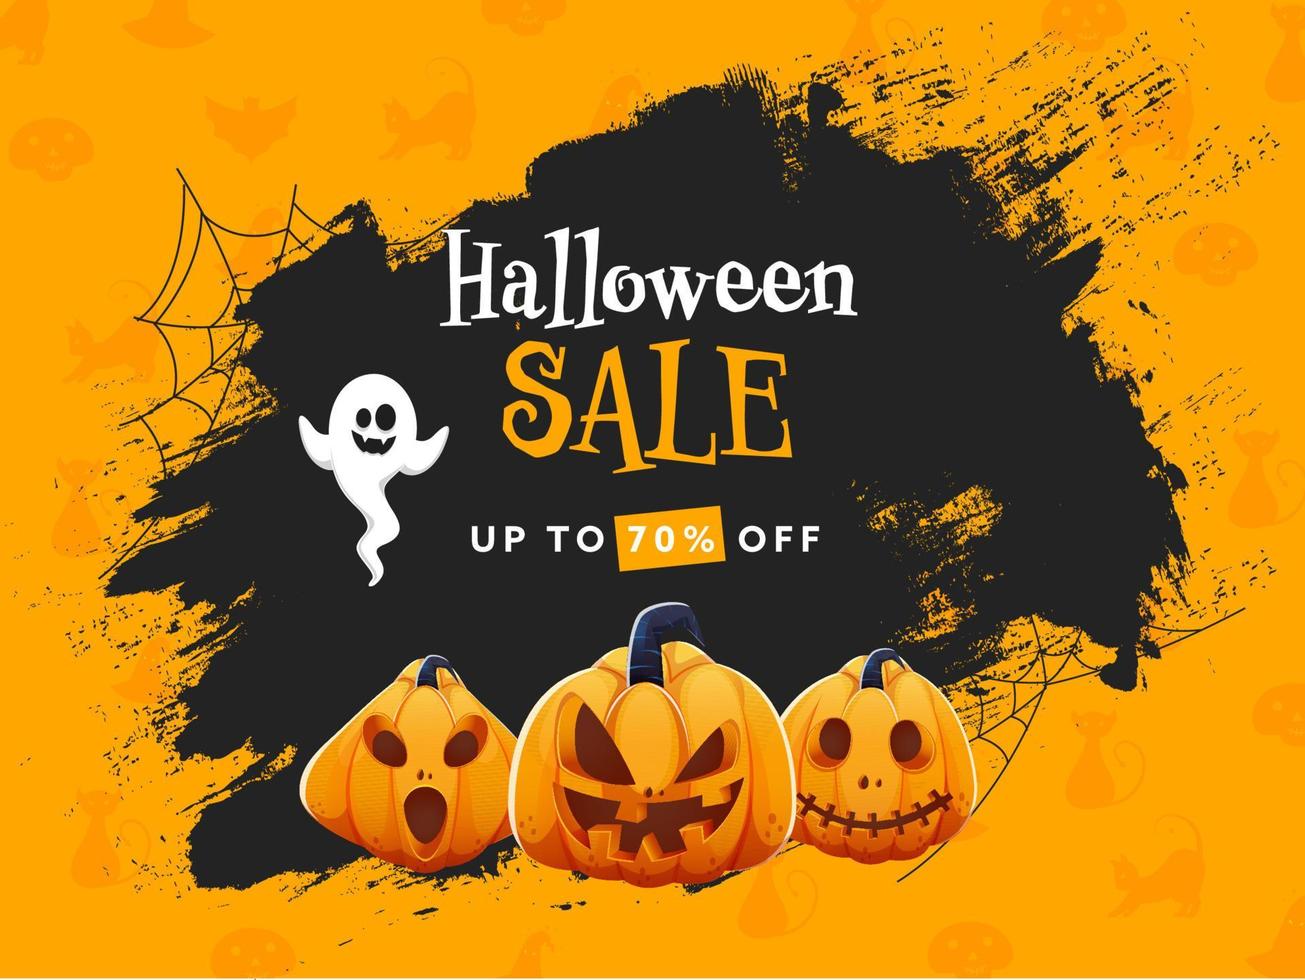 Halloween vendita manifesto design con sconto offerta, jack-o-lantern, cartone animato fantasma e nero spazzola grunge su arancia sfondo. vettore